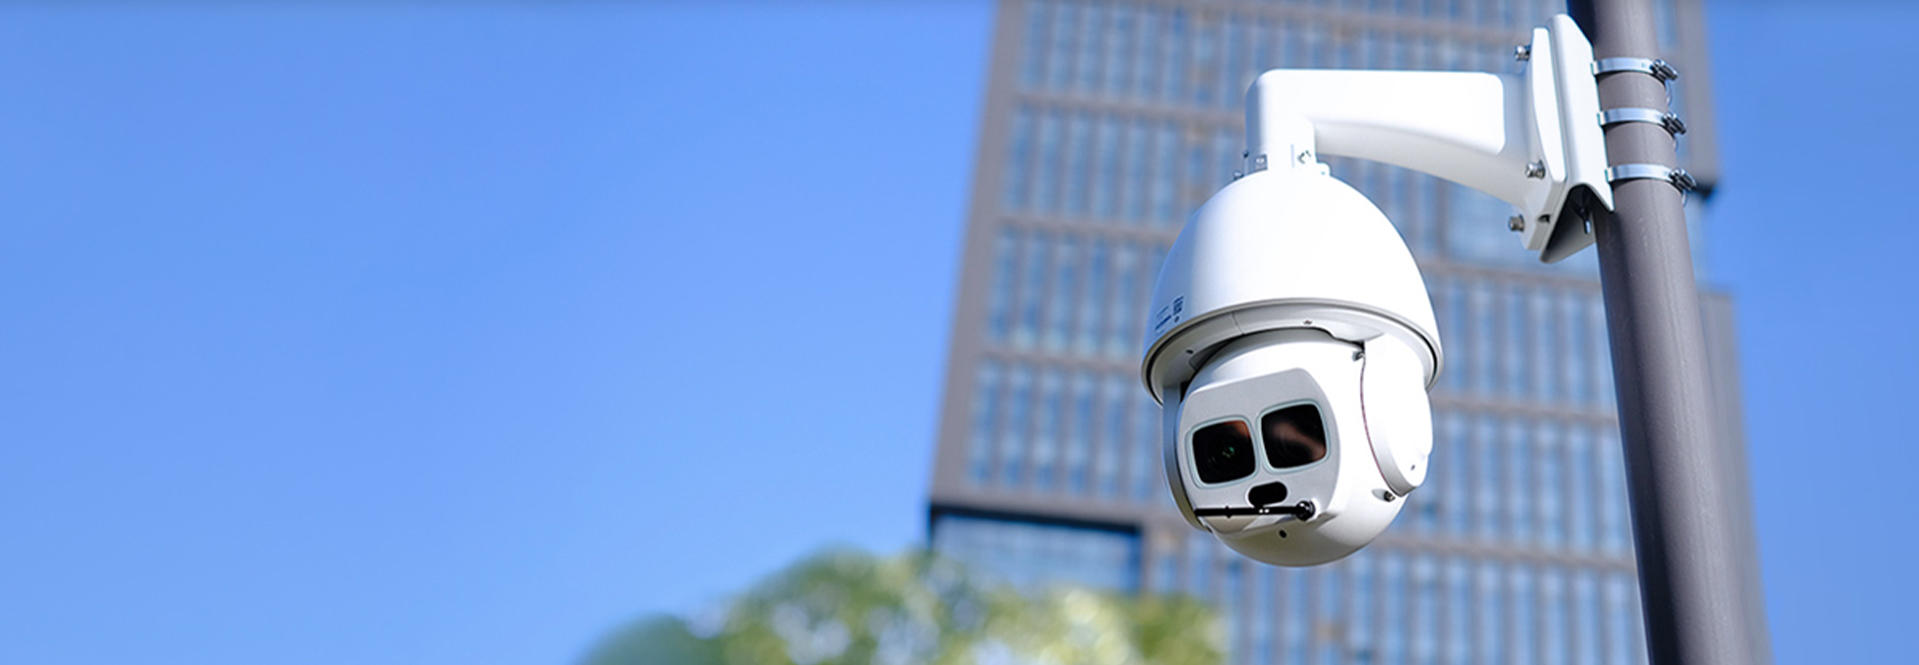 sentry security system video surveillance